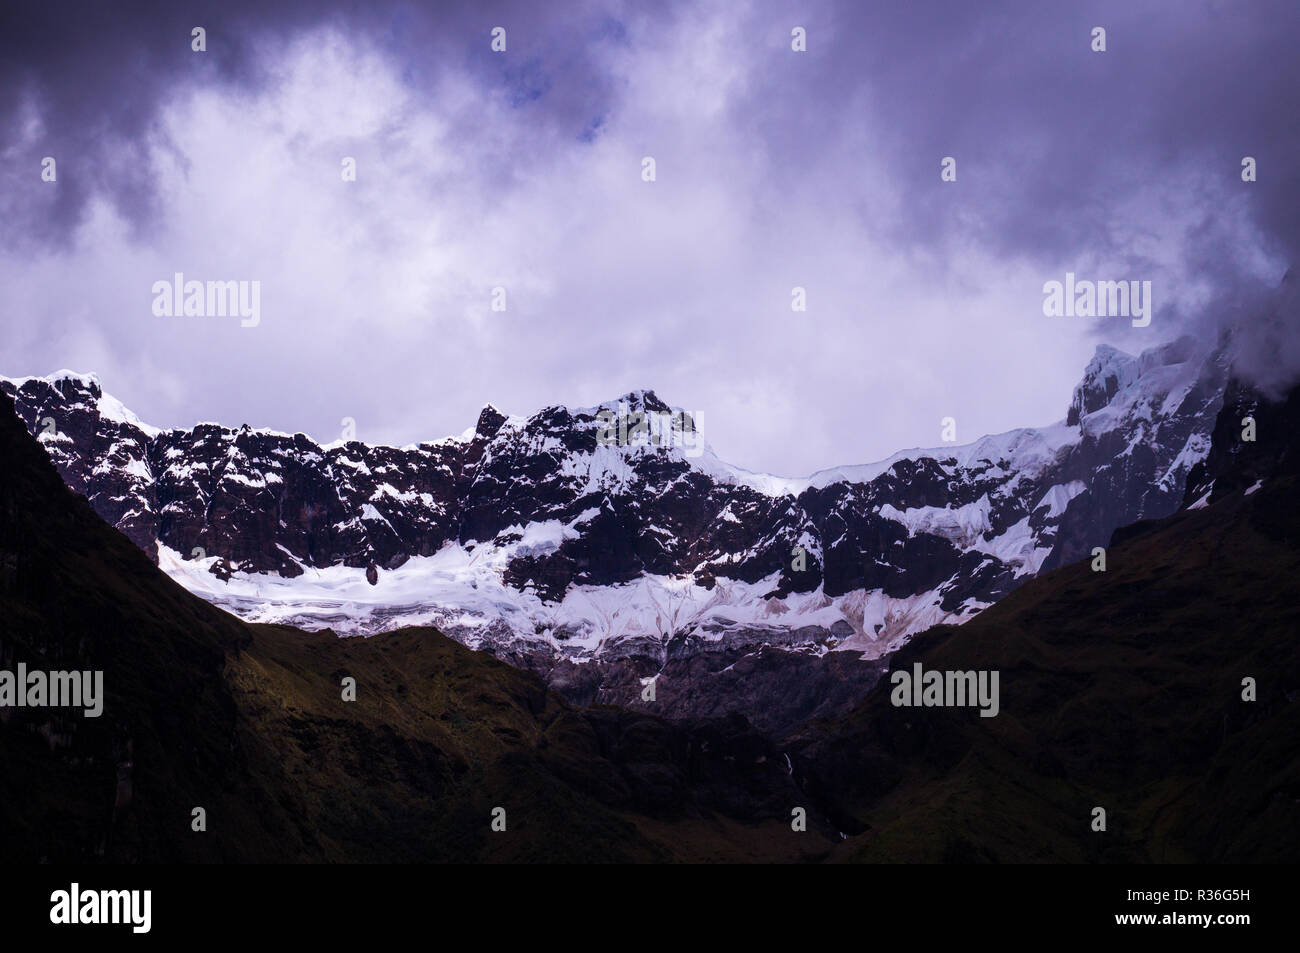 Snow covers the glacier at El Altar Volcano in the Andes near Banos, Ecuador. The Andean landscape near Banos in Ecuador features volcanic glaciers an Stock Photo